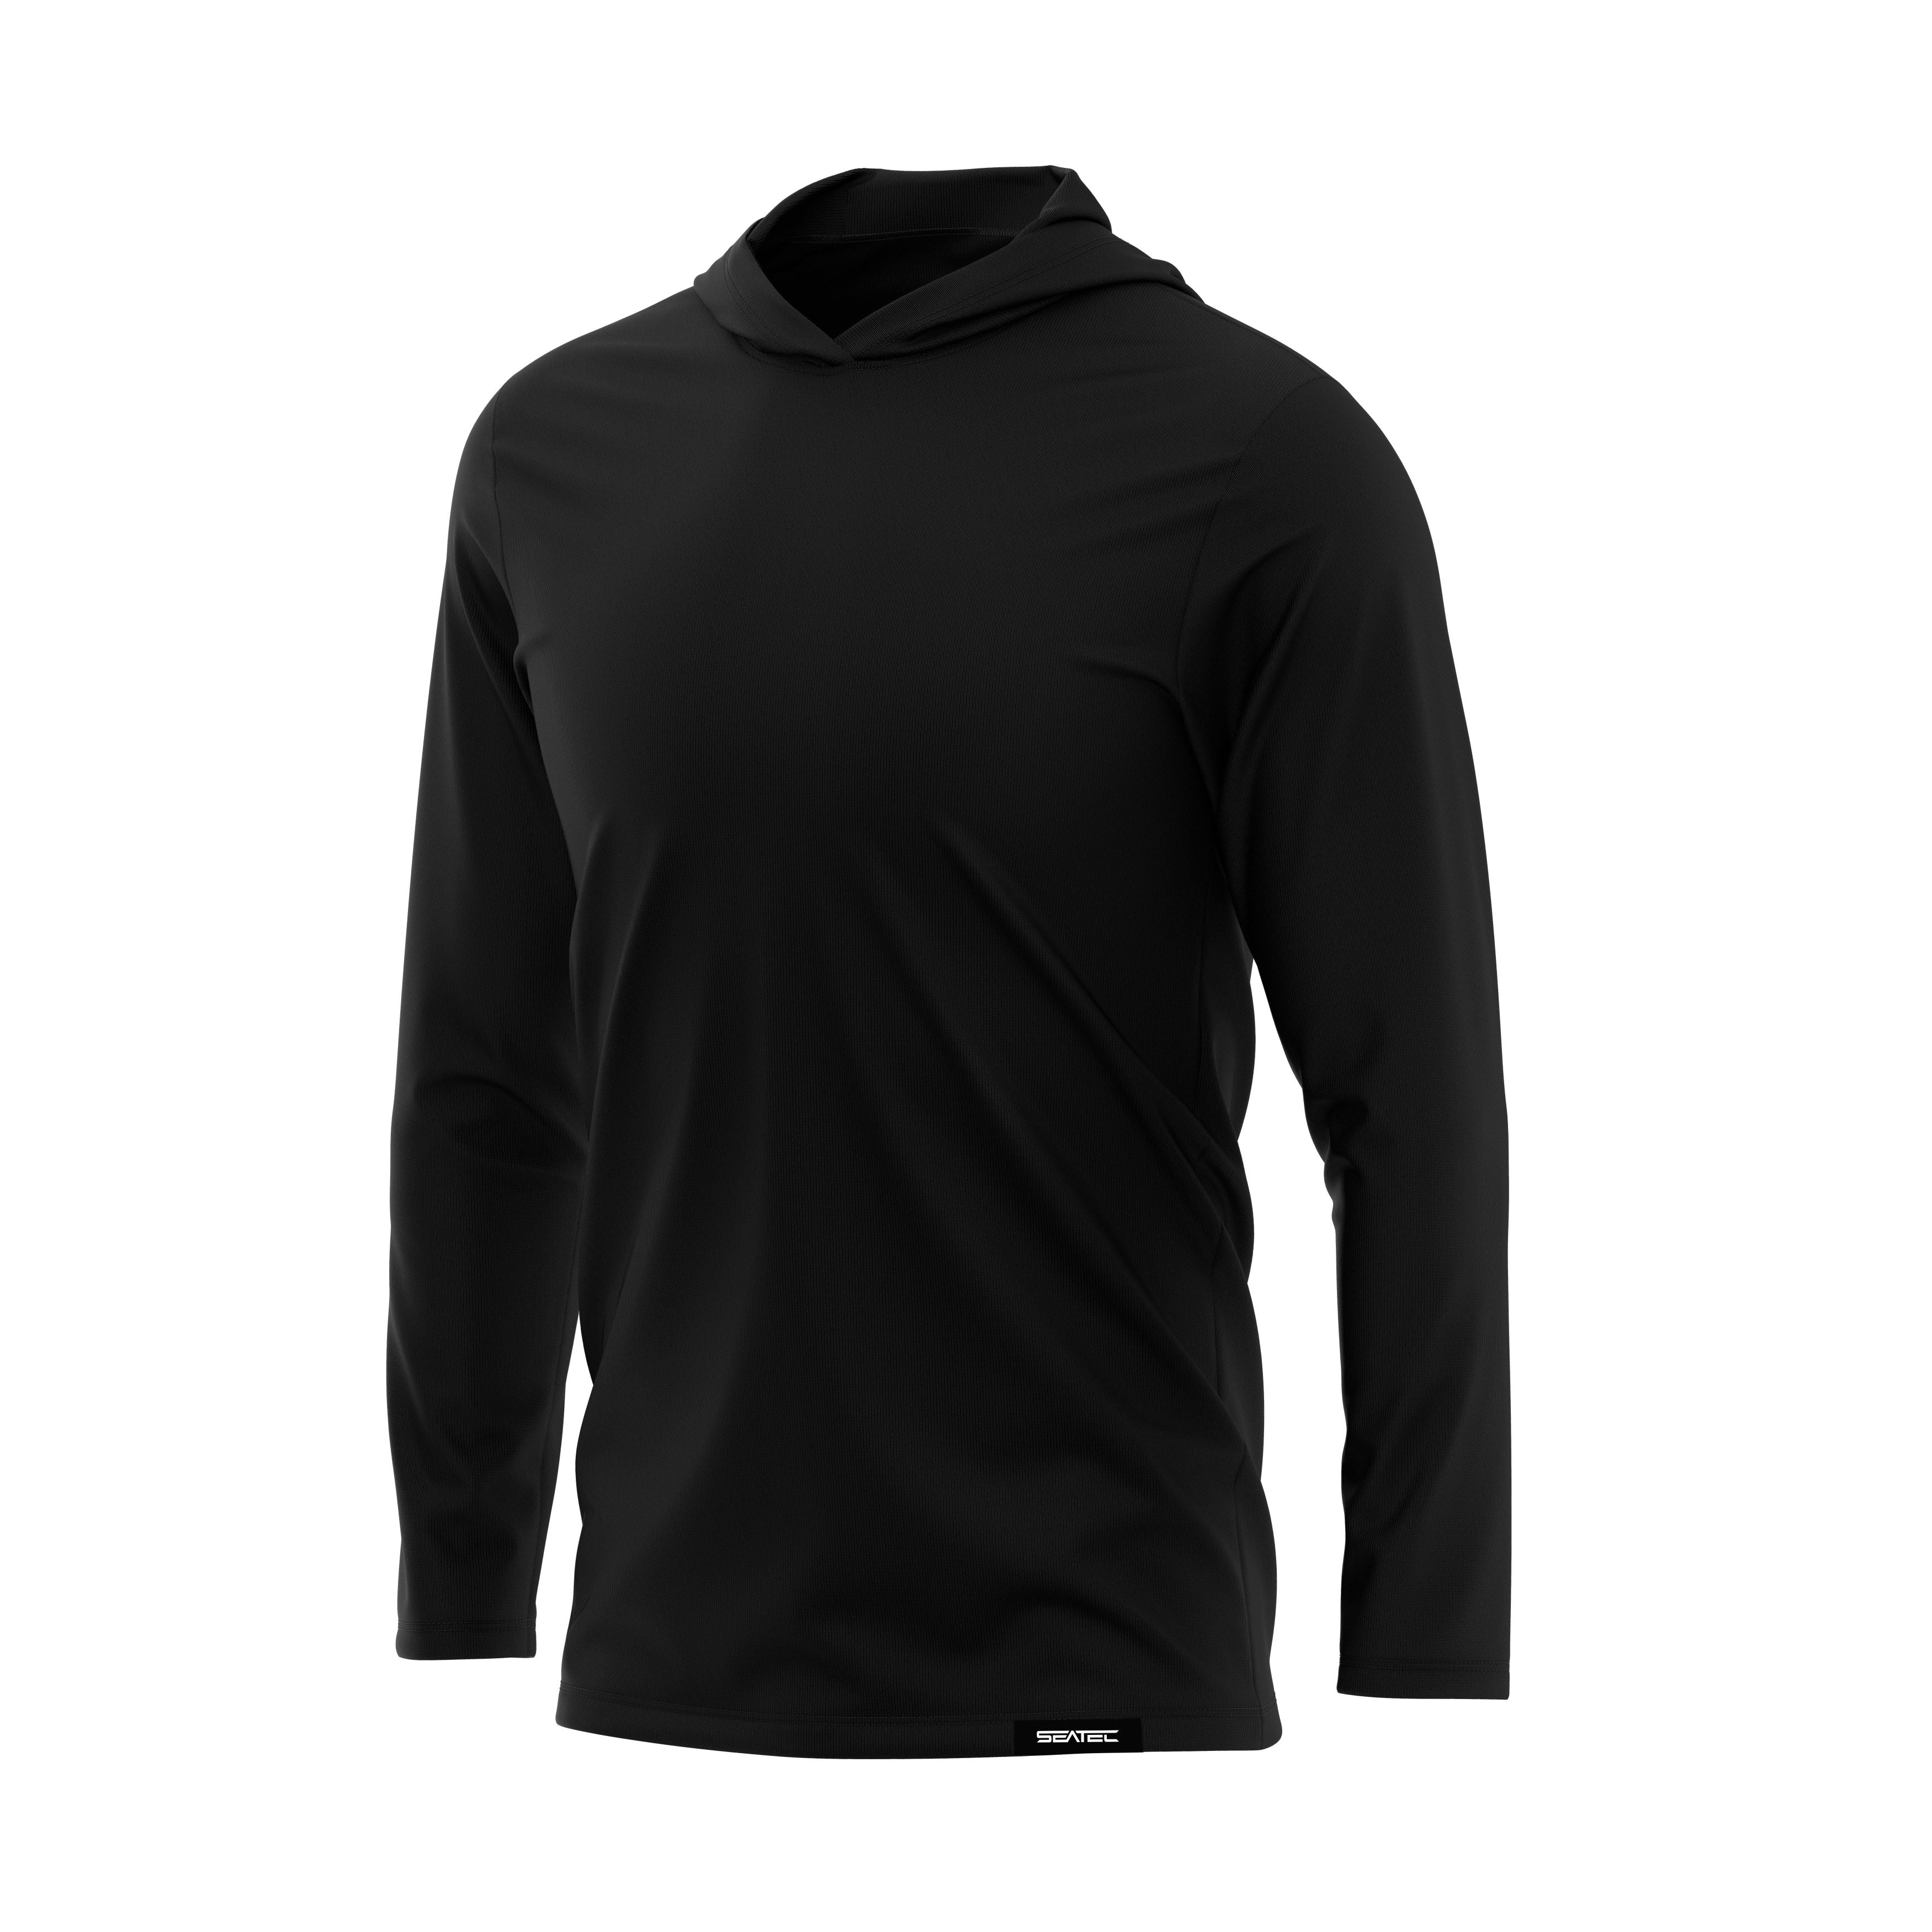 Active Black - Men's Hooded Performance Fishing Shirt - Best Sun Shirts - Multi-Seasonal - UPF 50+ - Long Sleeve Fishing Shirt - S